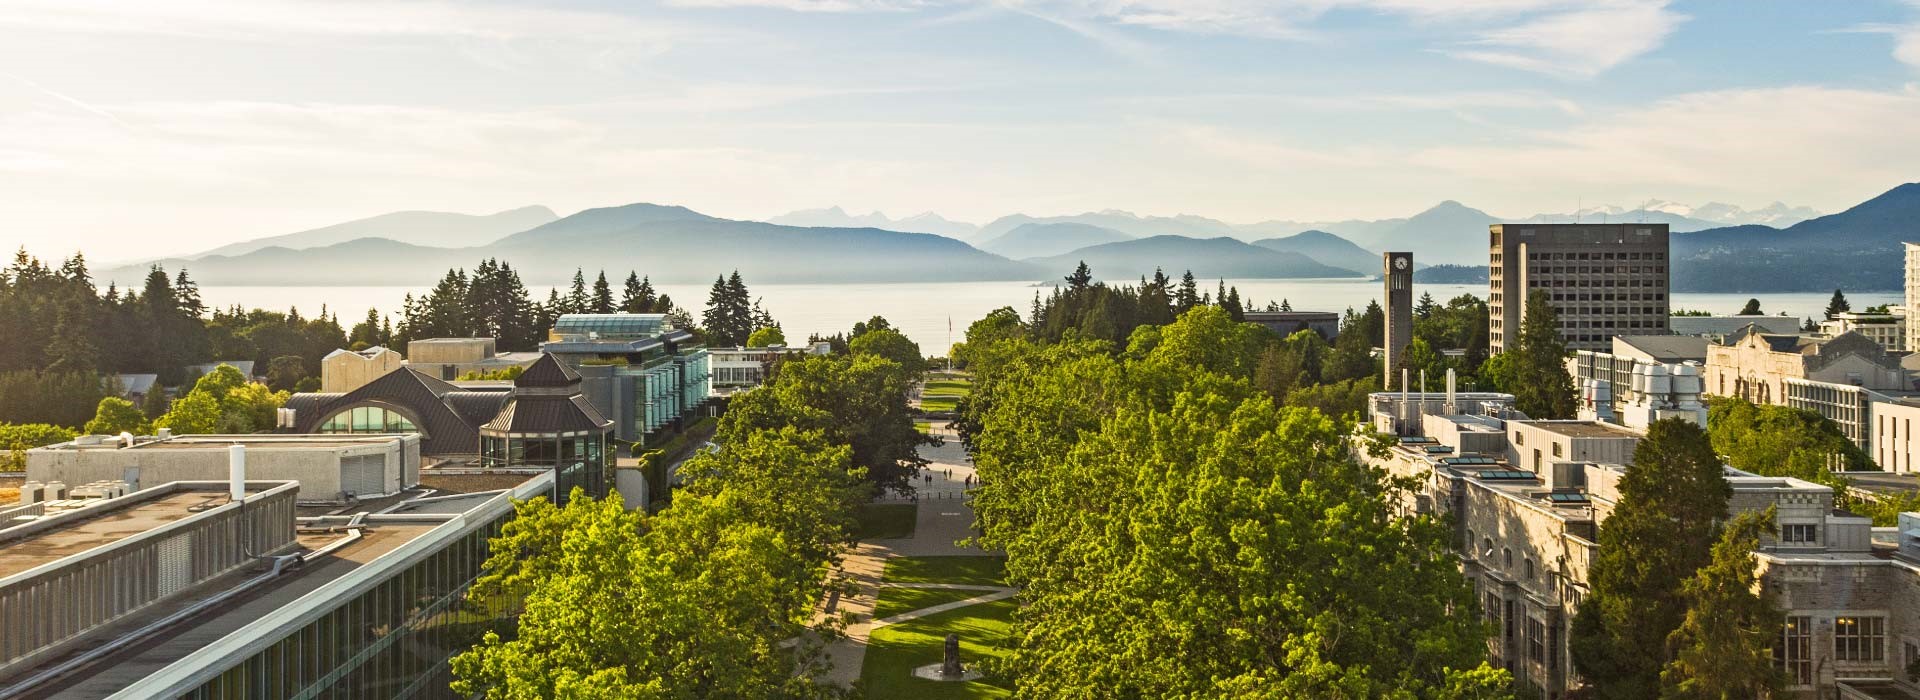 Đại học British Columbia, Canada